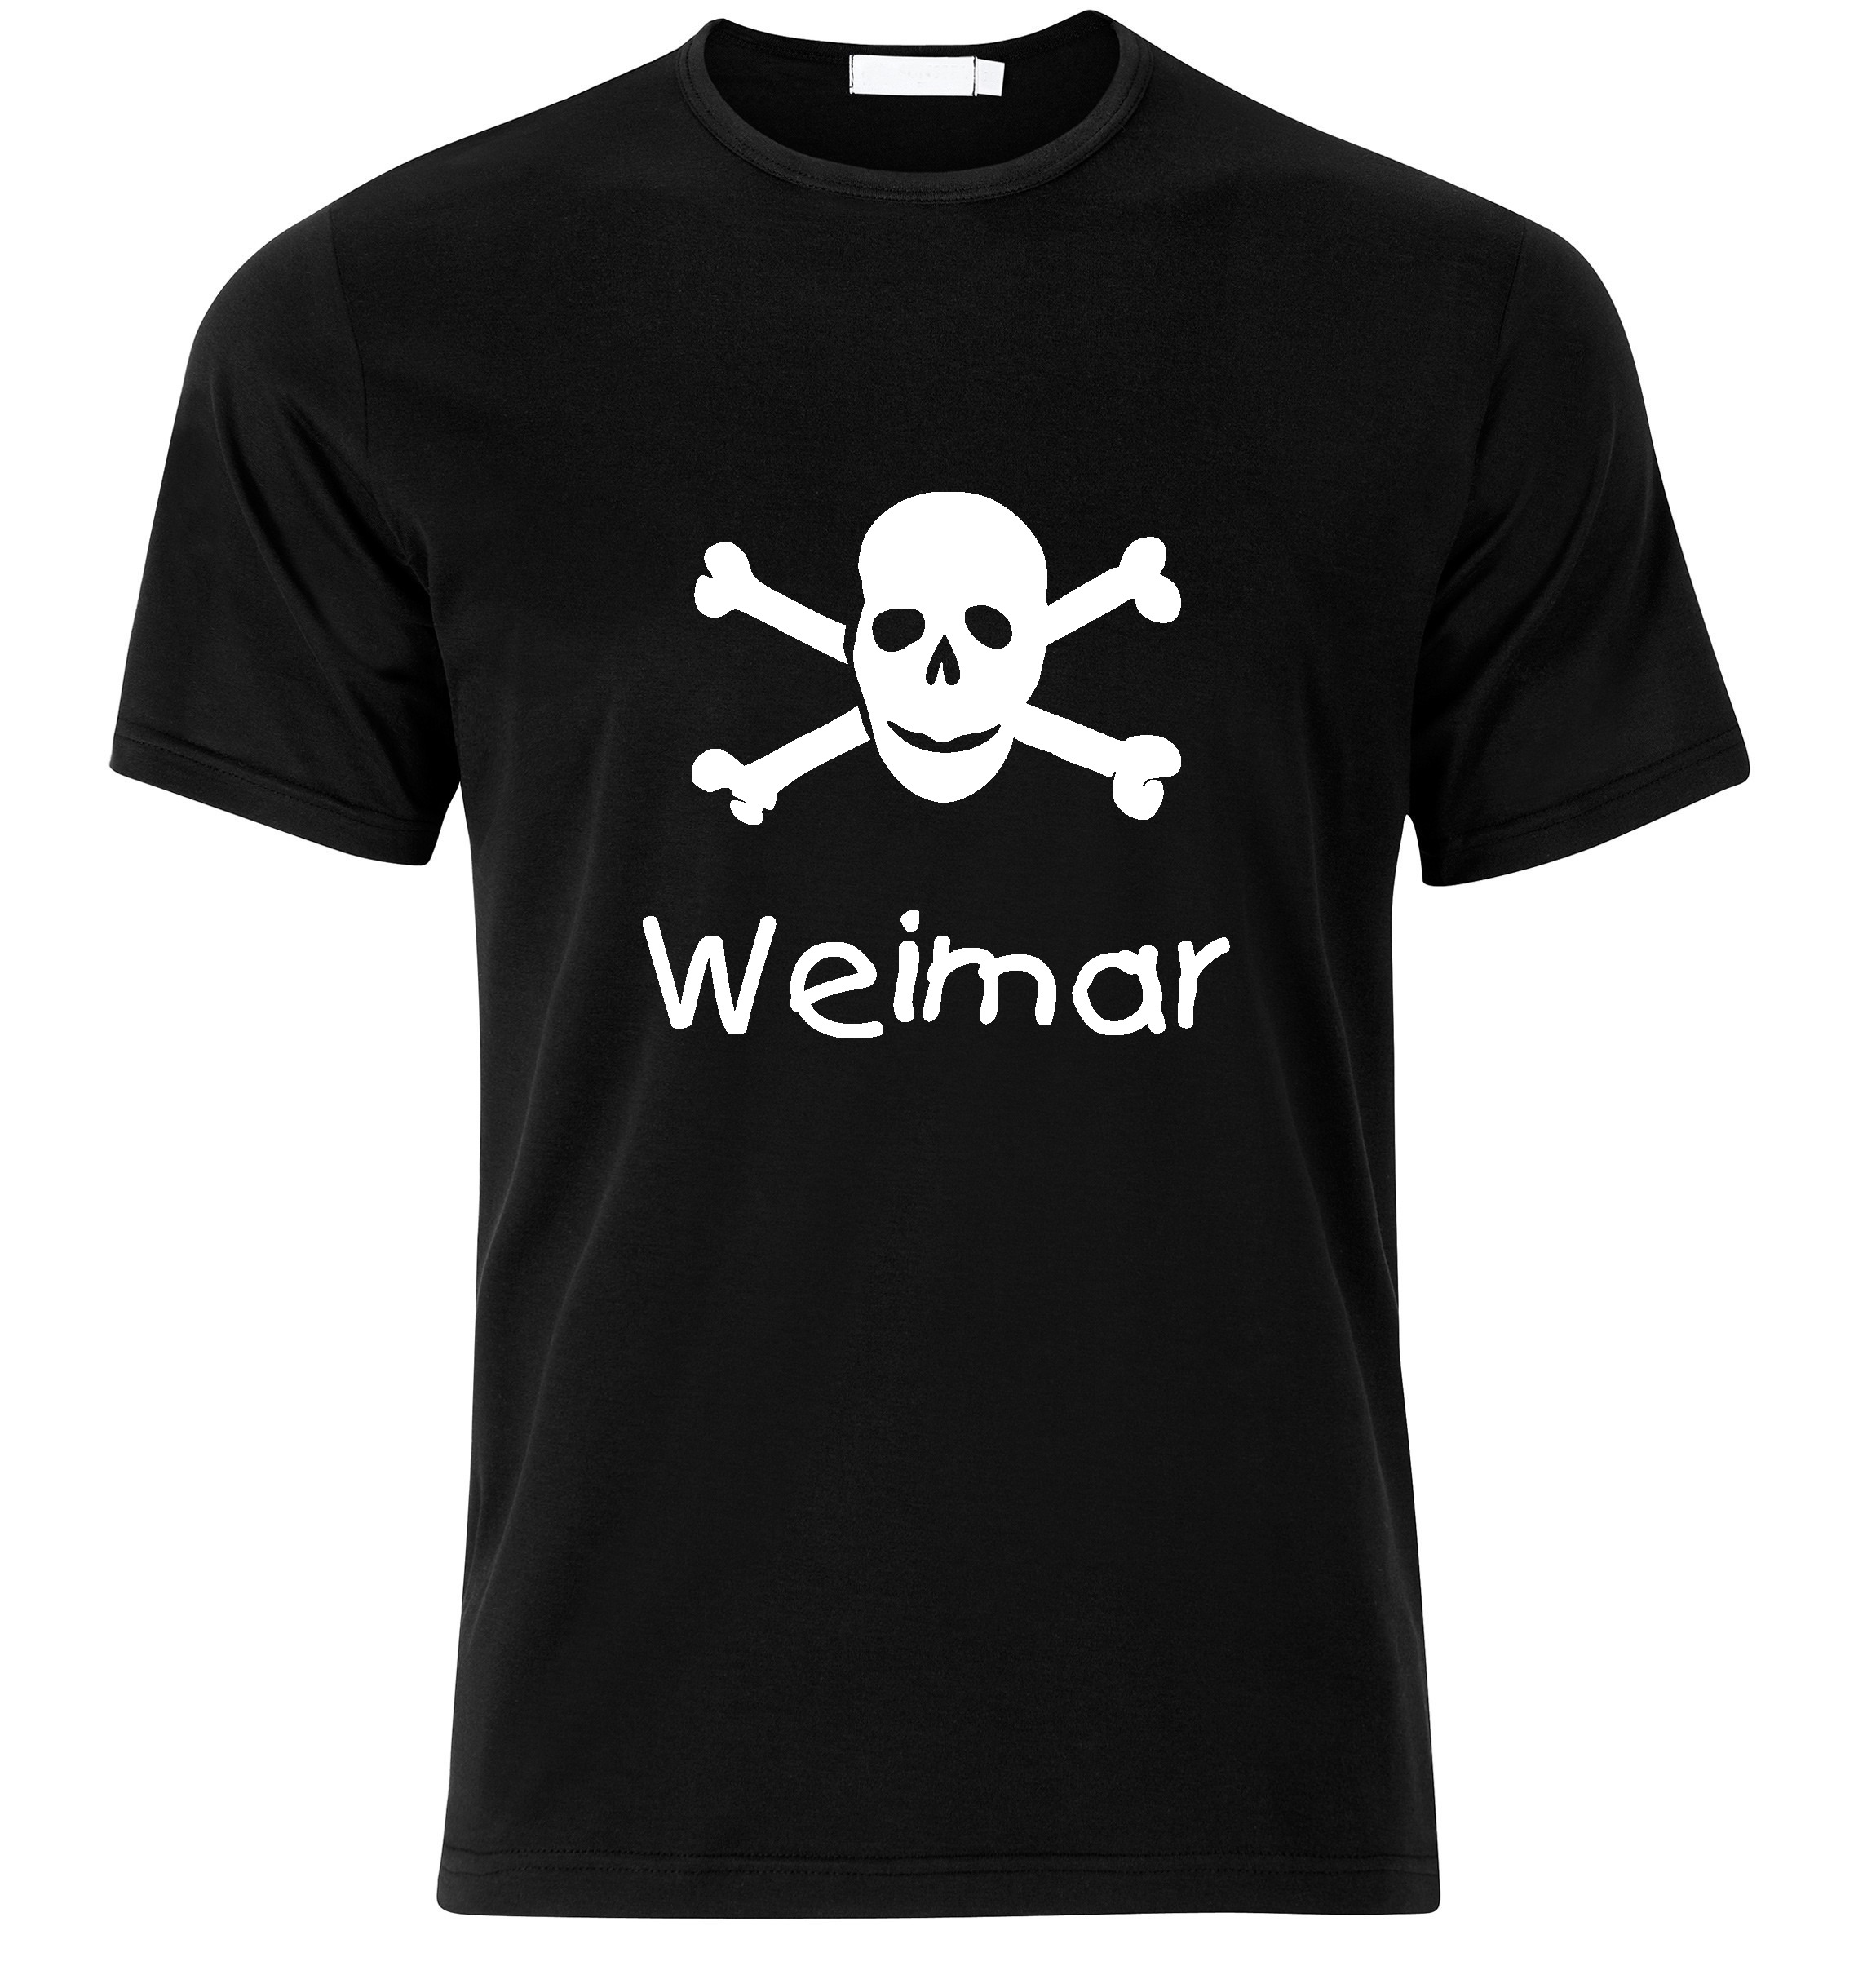 T-Shirt Weimar Jolly Roger, Totenkopf